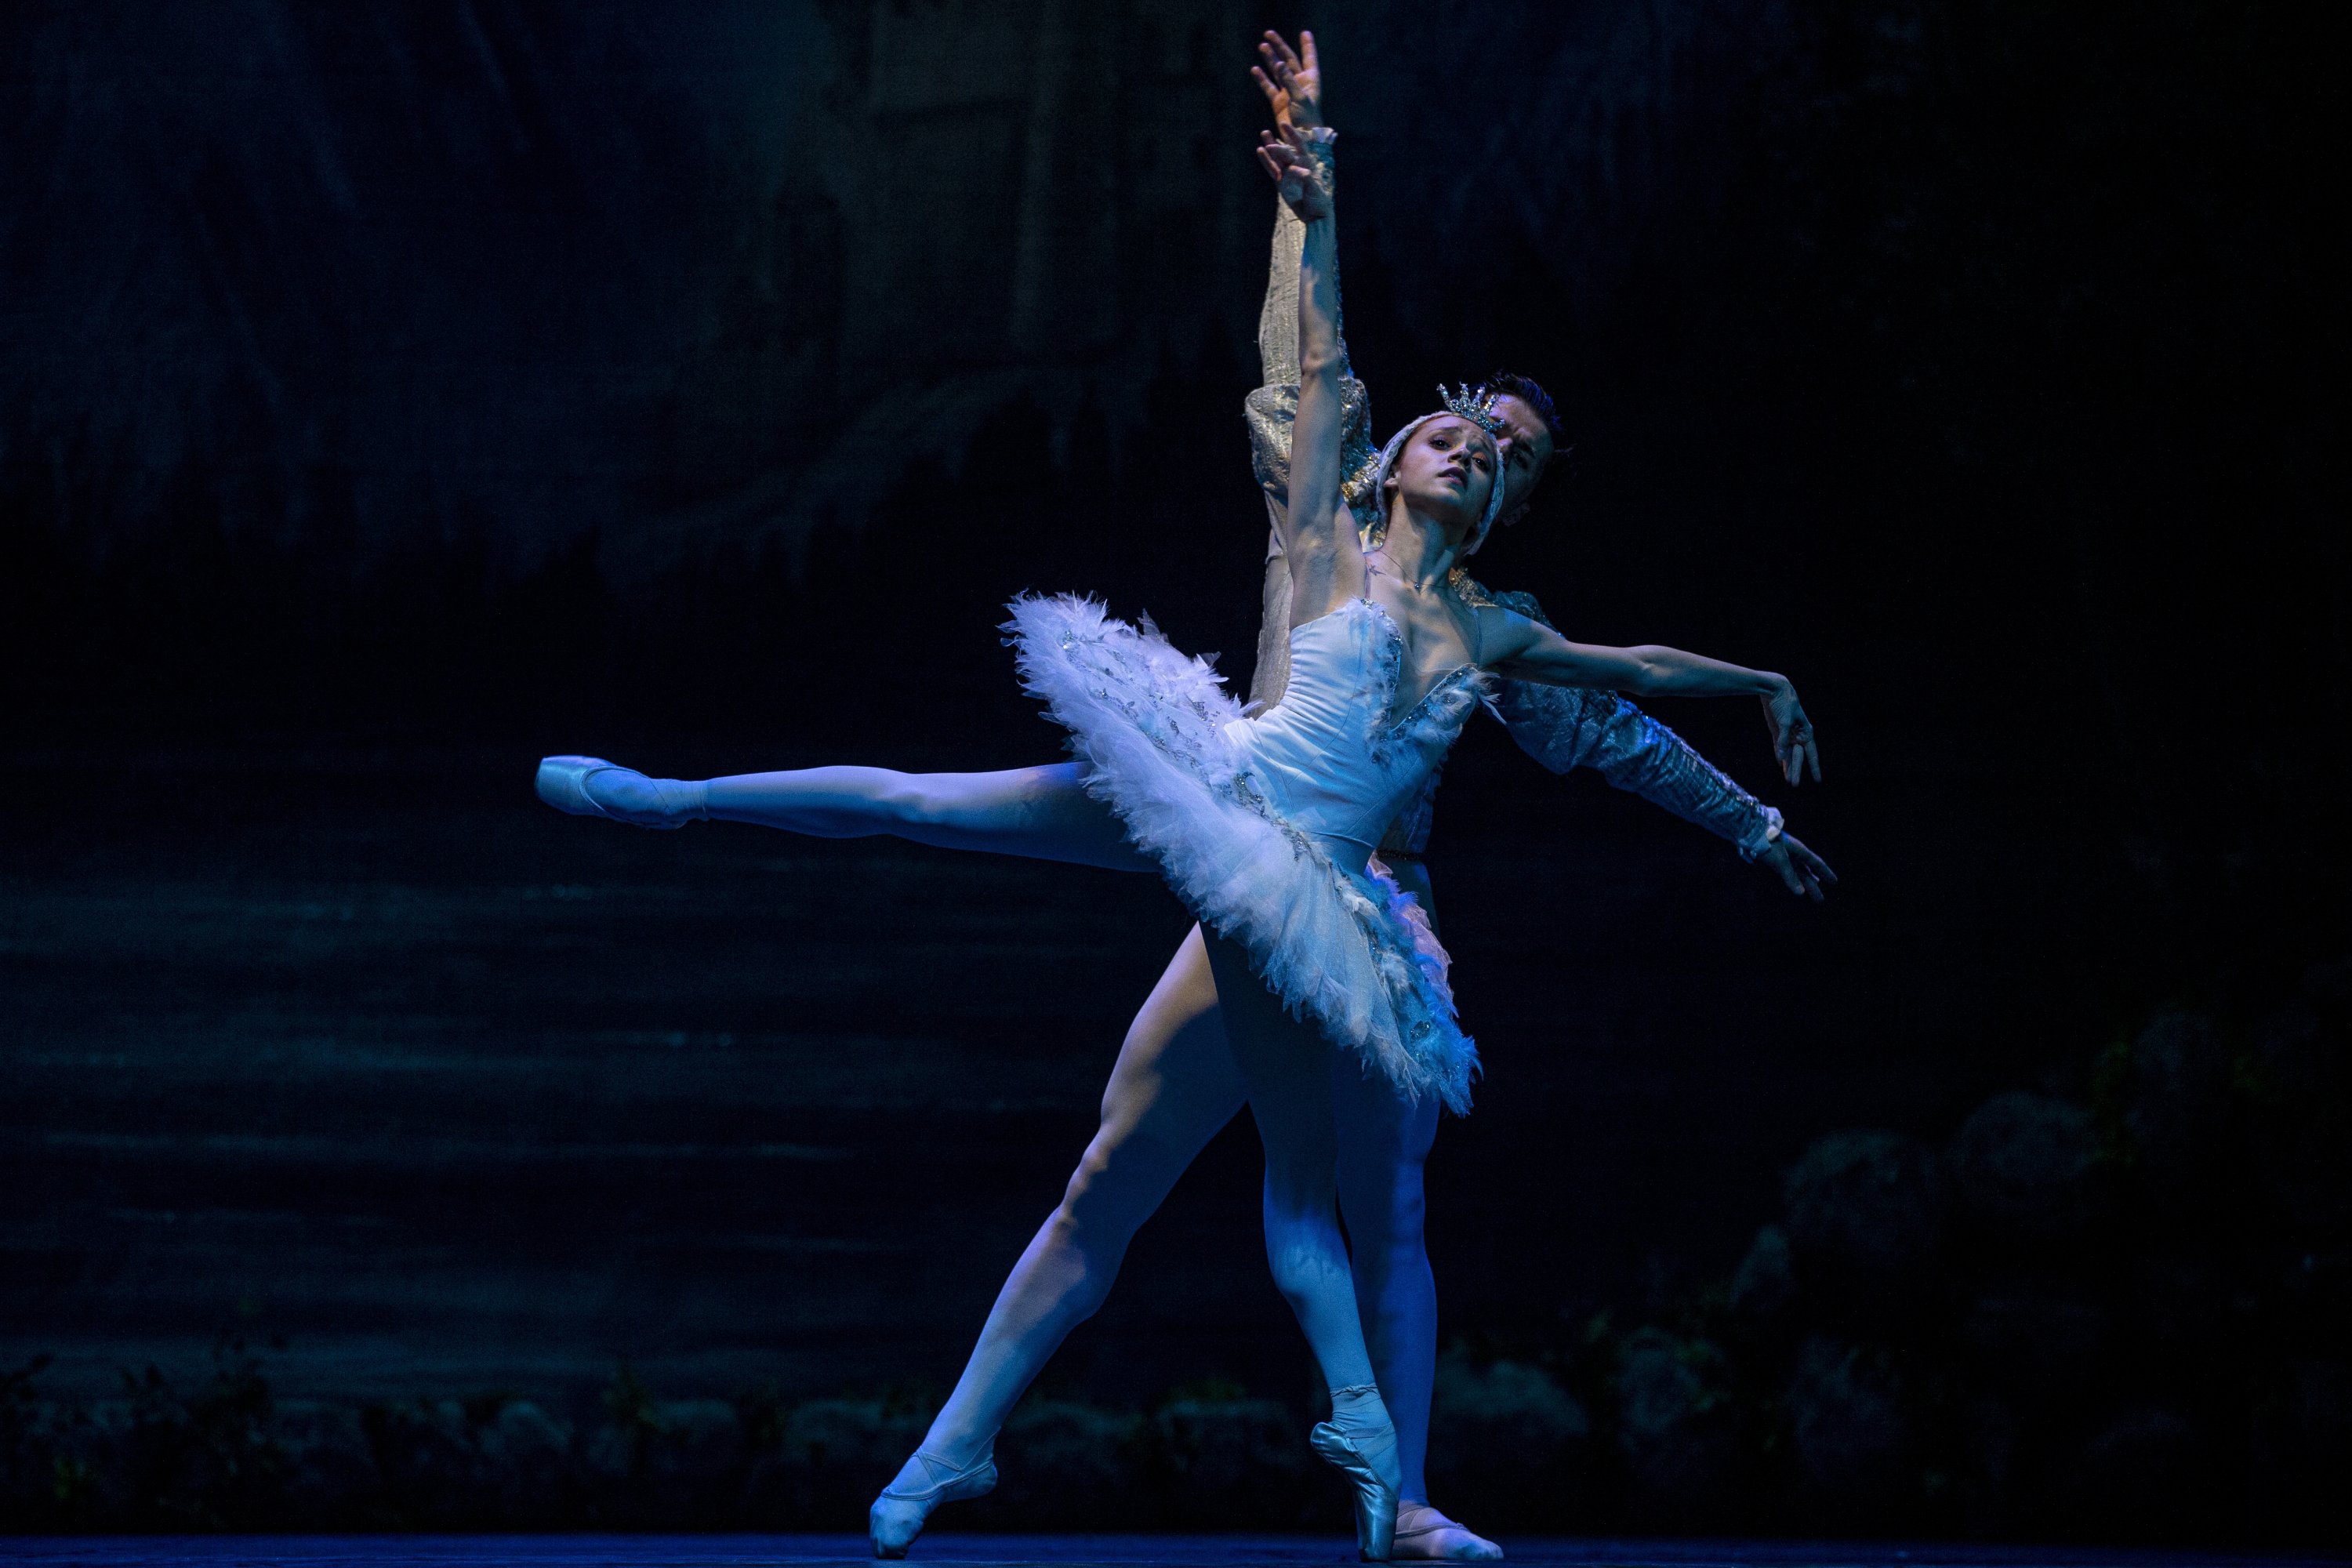 Two ADOB ballet dancers perform “Swan Lake